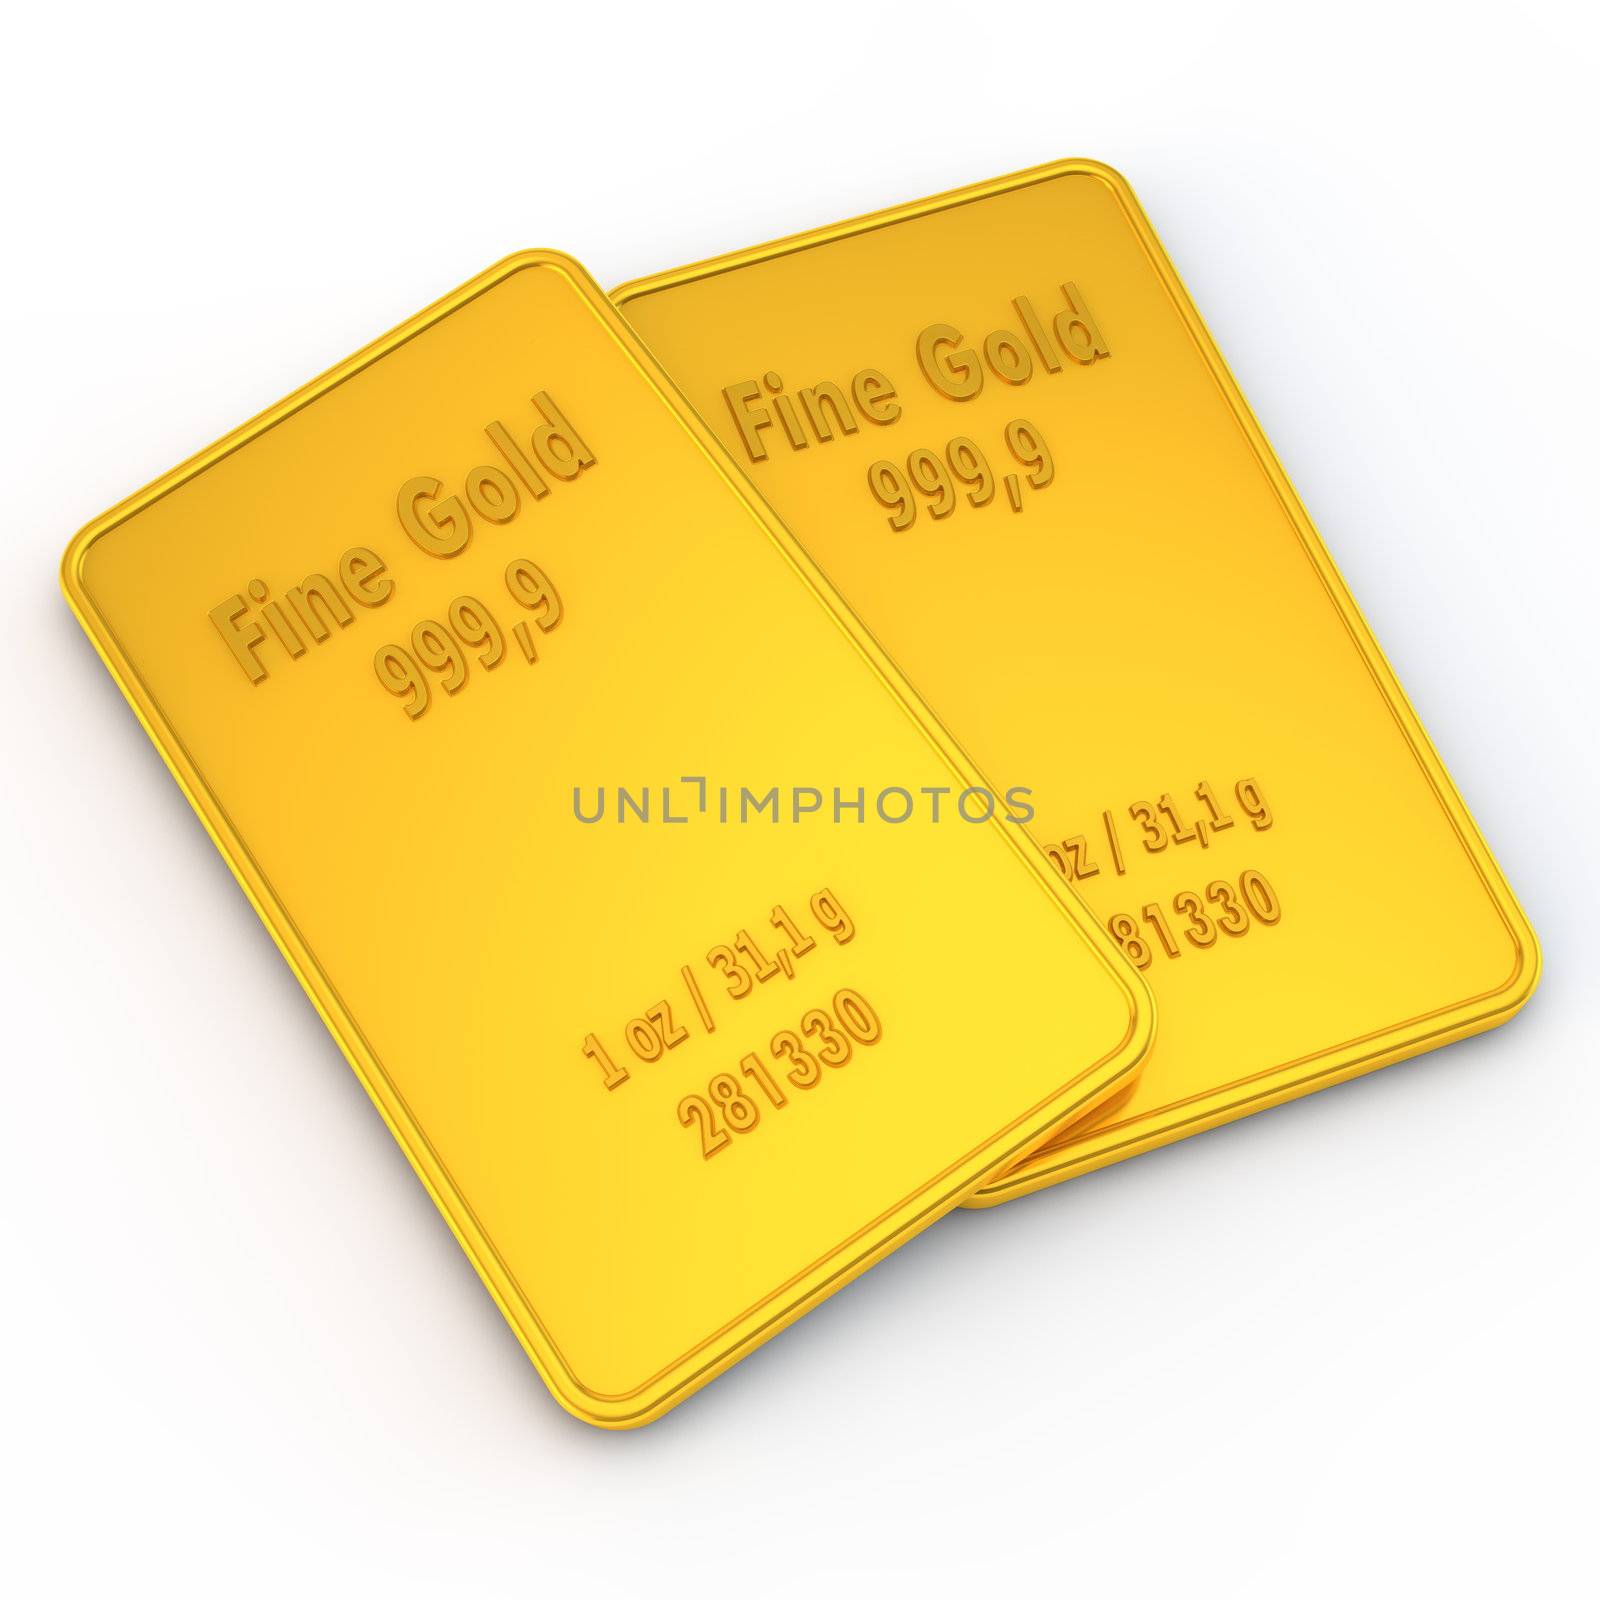 2 Mini Gold Bars - 1 ounce by PixBox